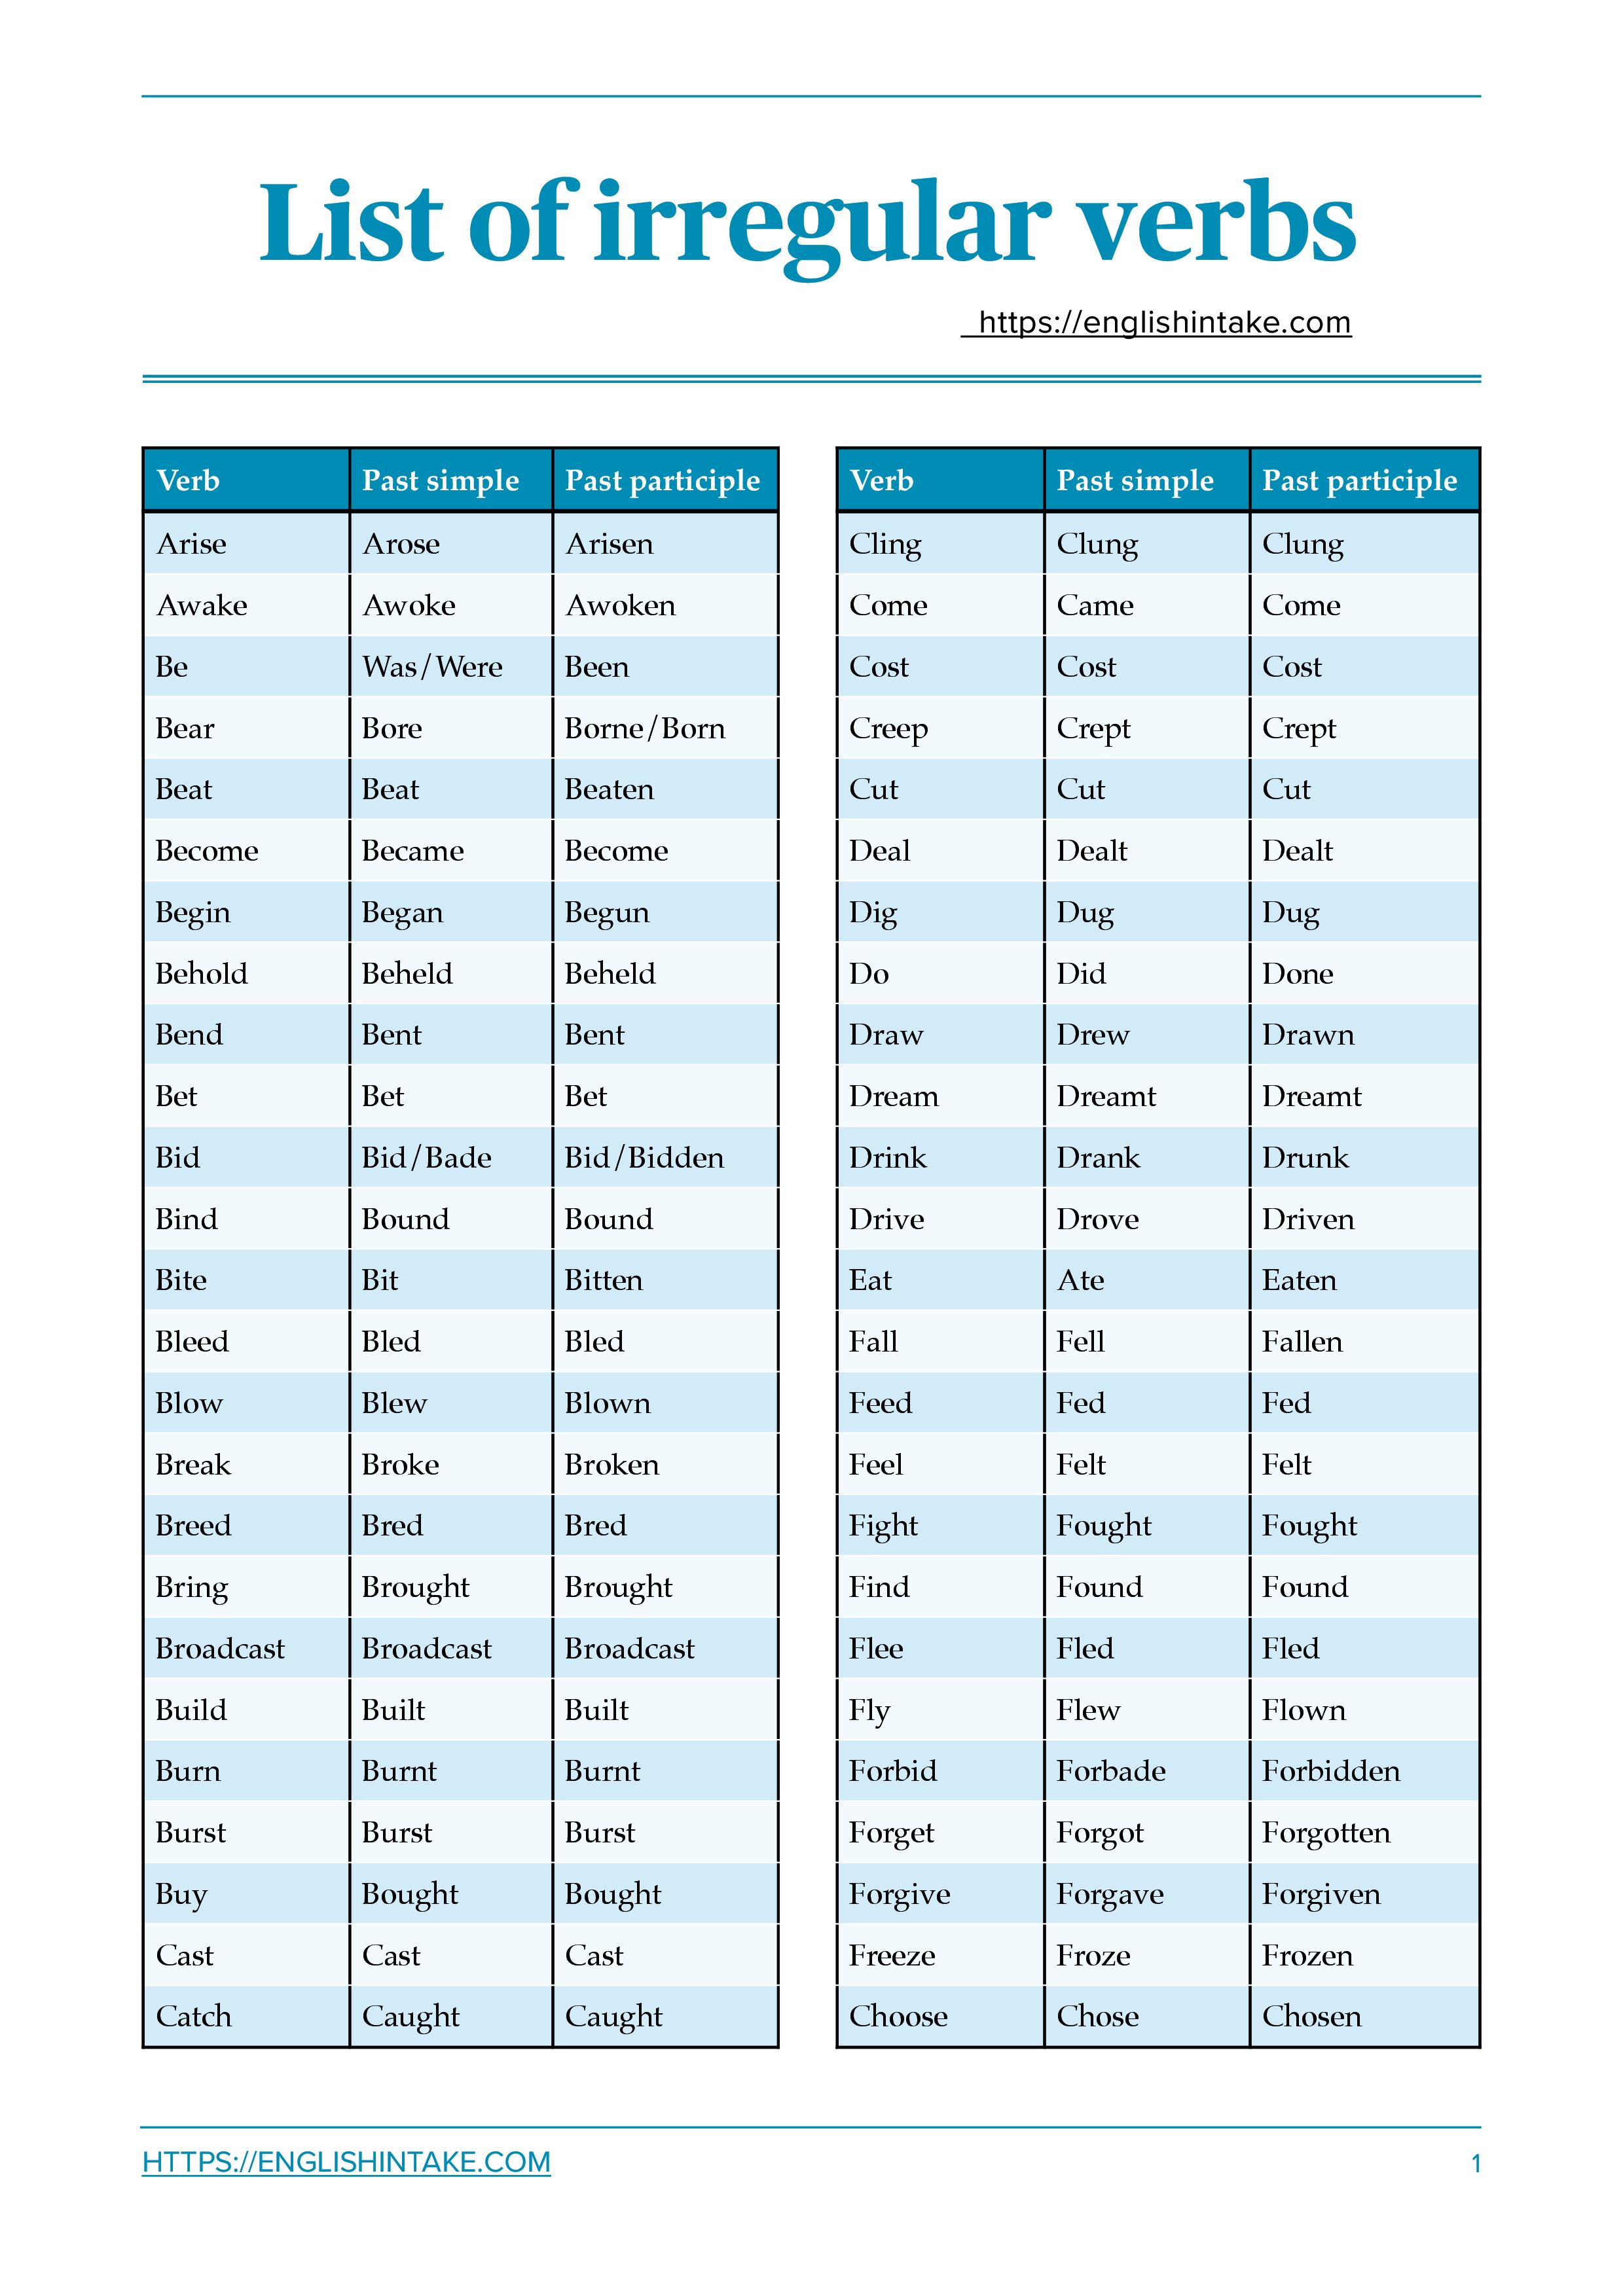 List of 150 common irregular verbs in English